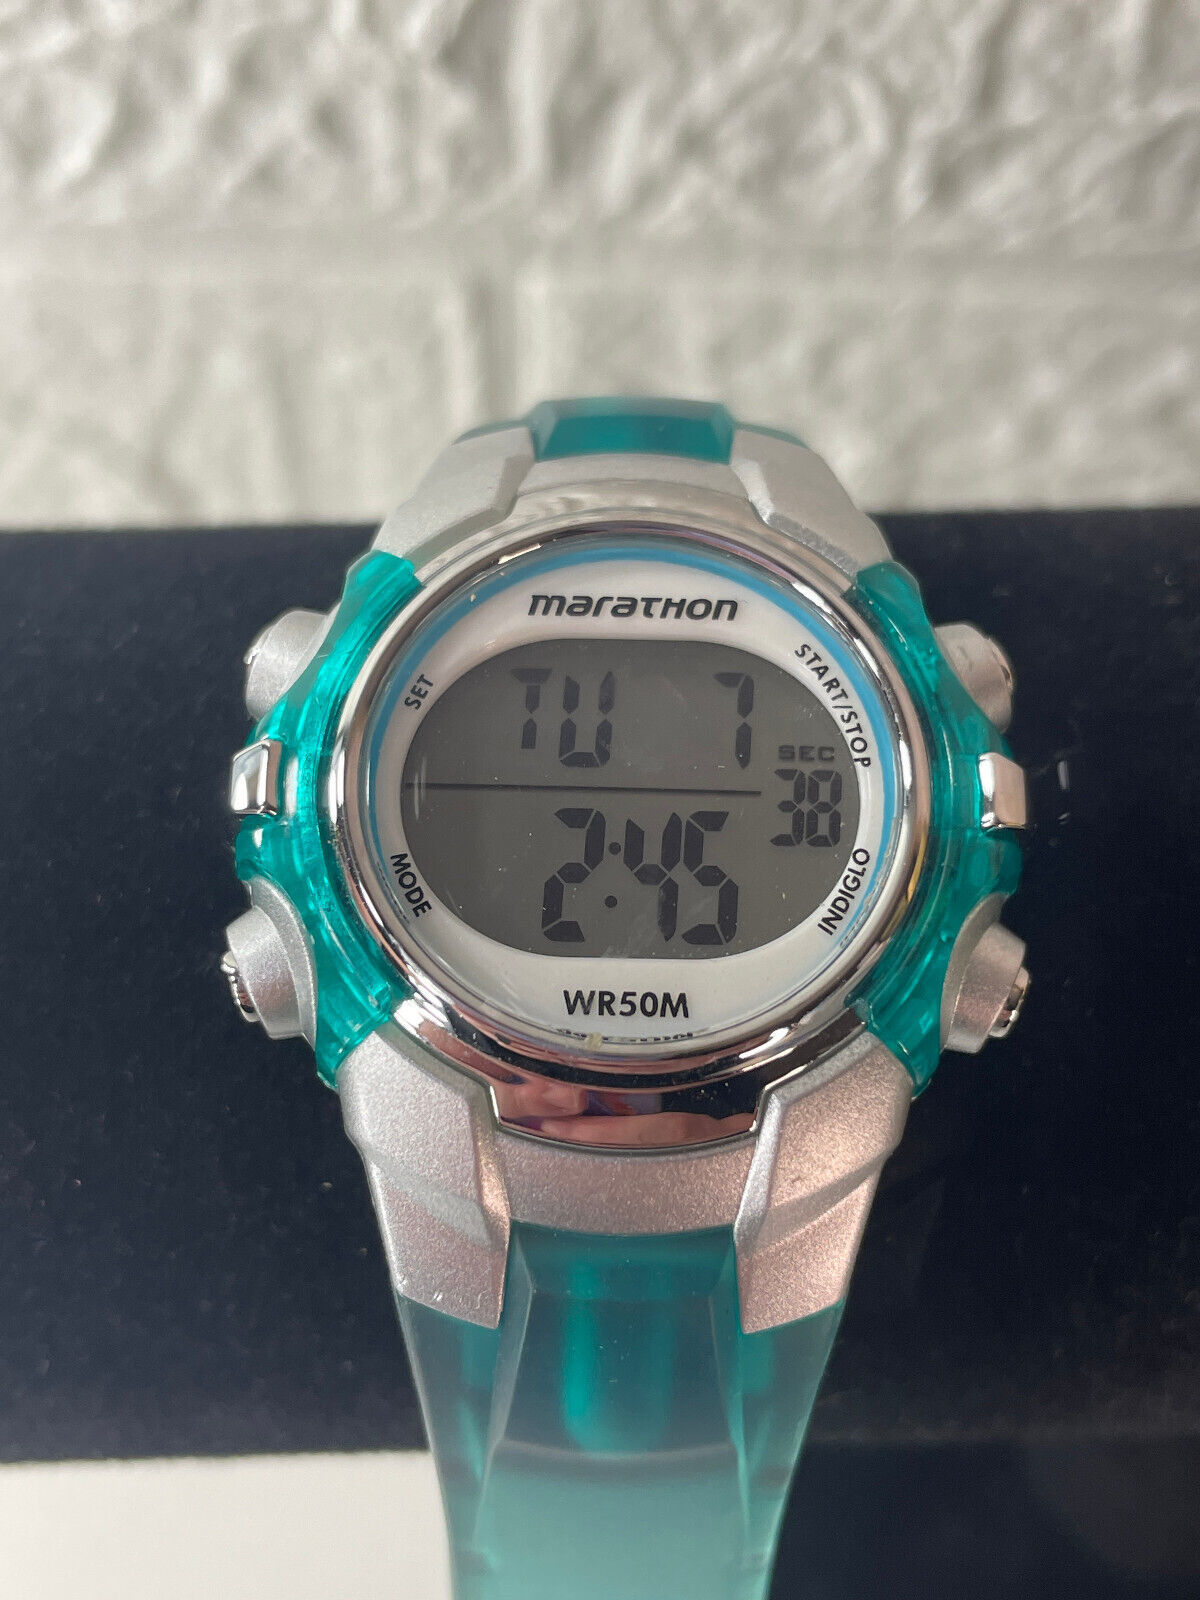 Primary image for Marathon T5K817 Sport Watch by Timex Aqua Blue Turquoise Women's Digital Watch